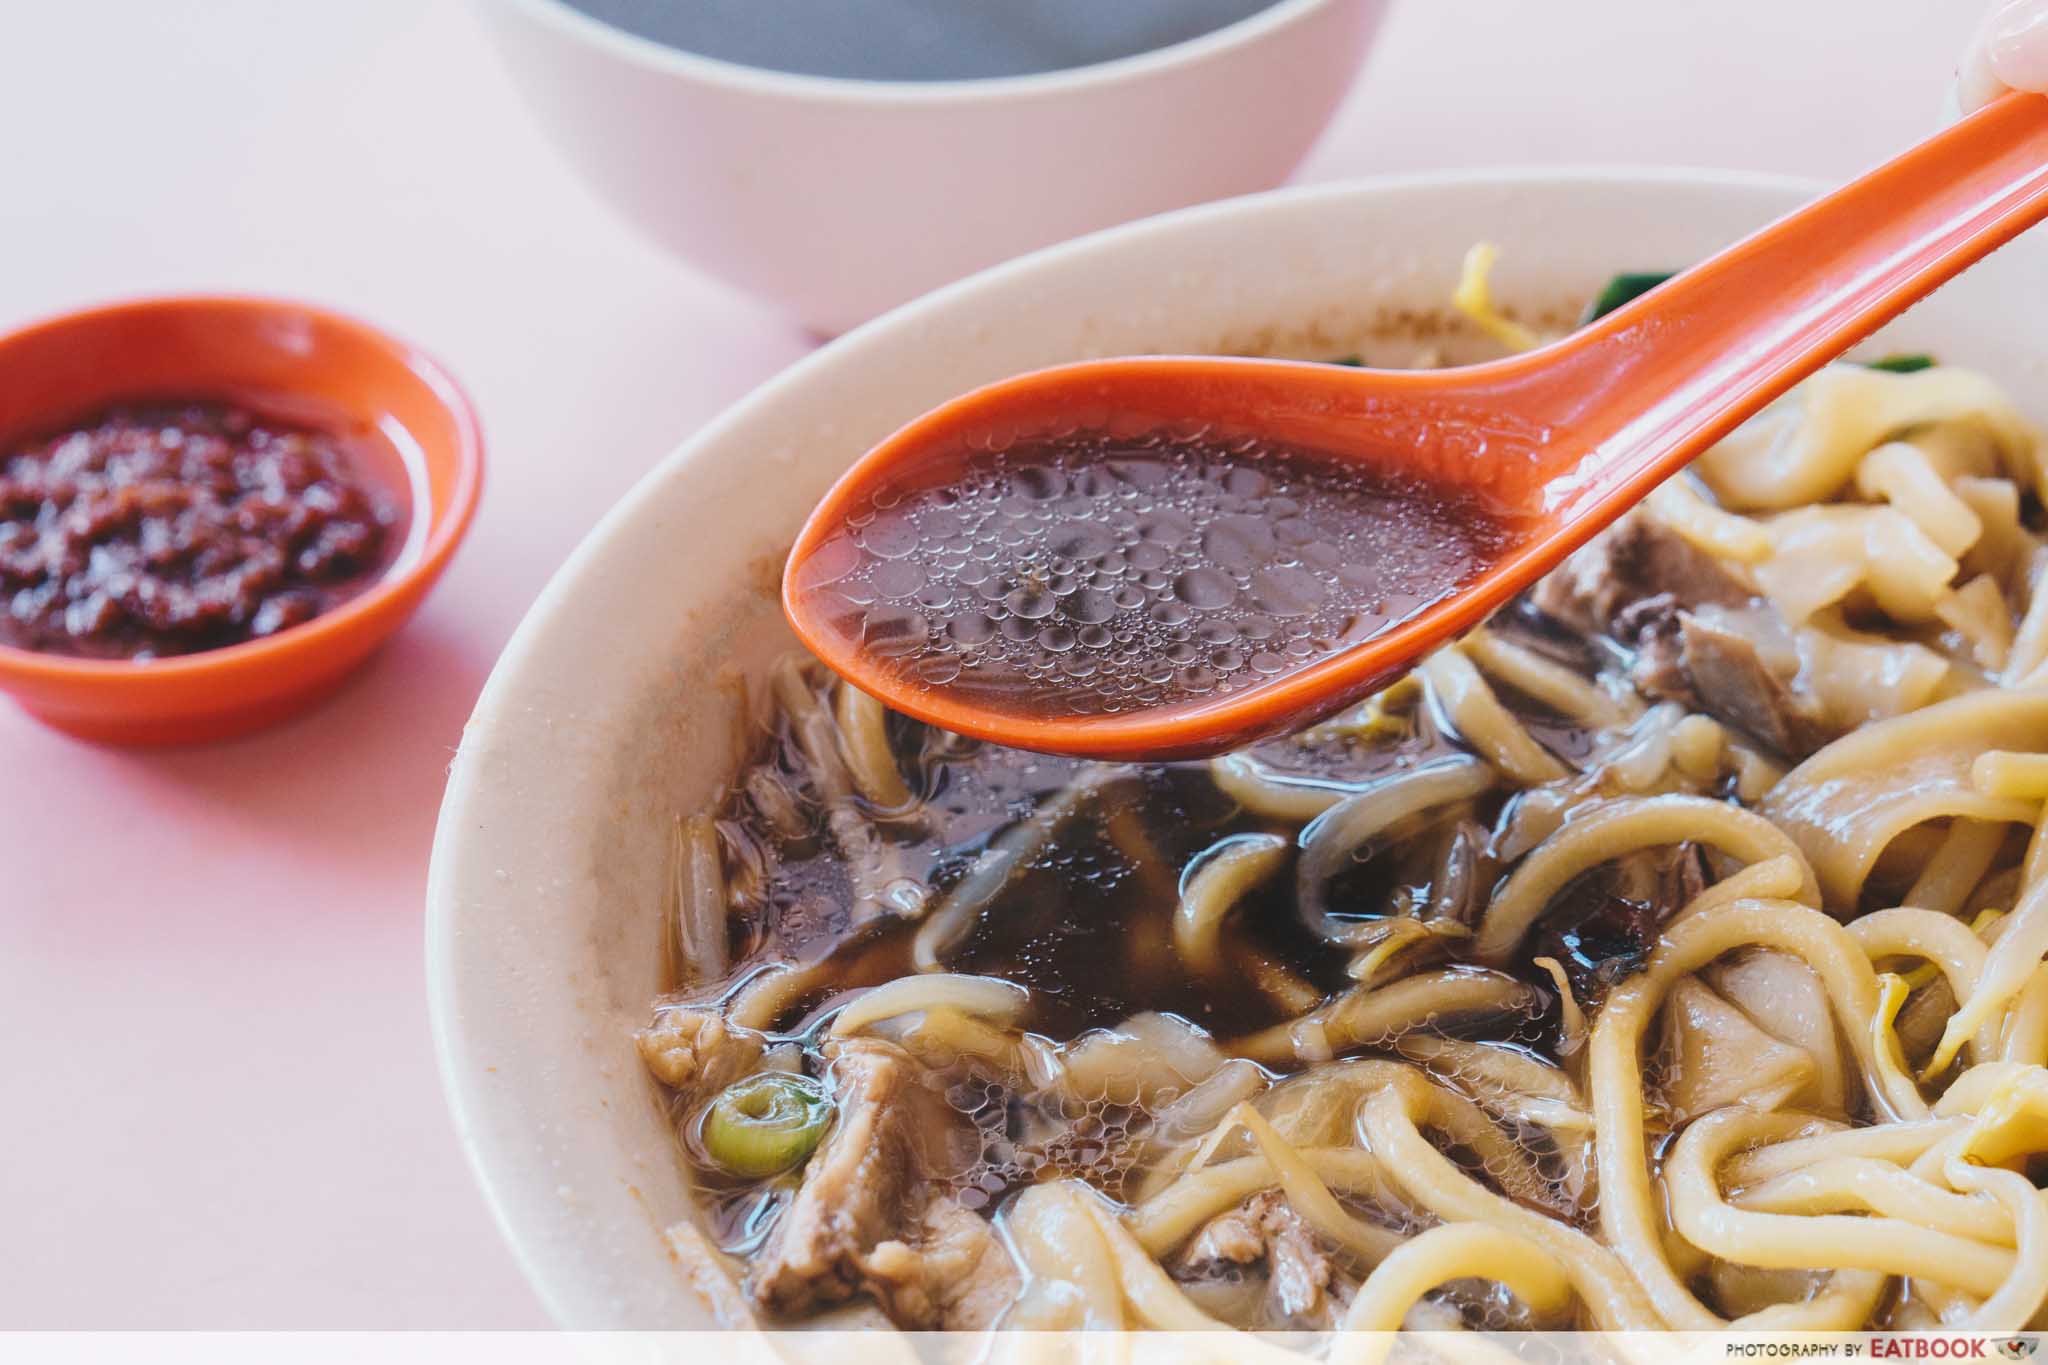 Heng Huat - Spoonful of herbal soup